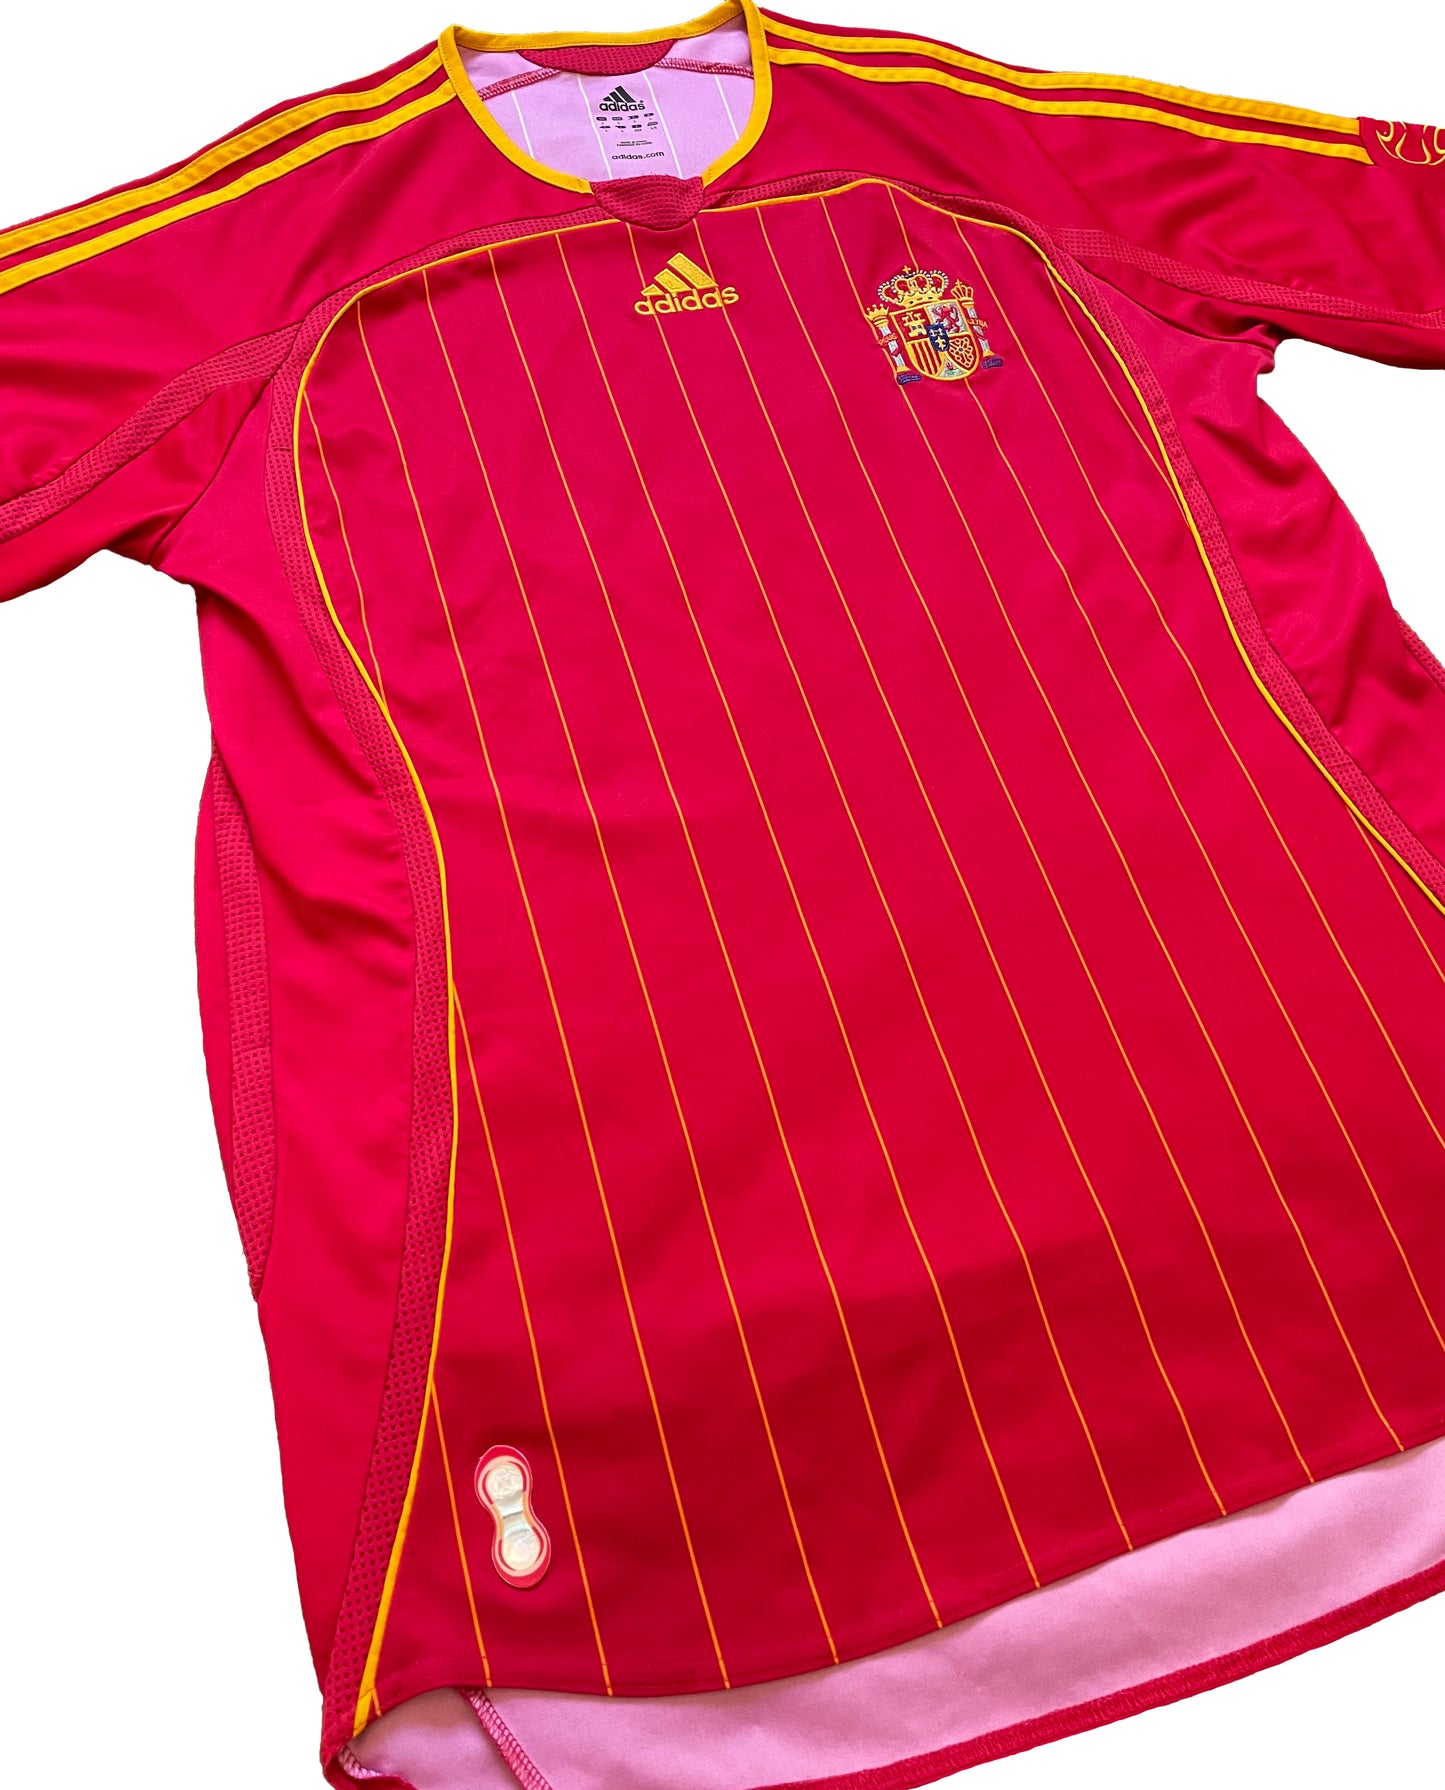 2006 World Cup Spain home shirt (L)